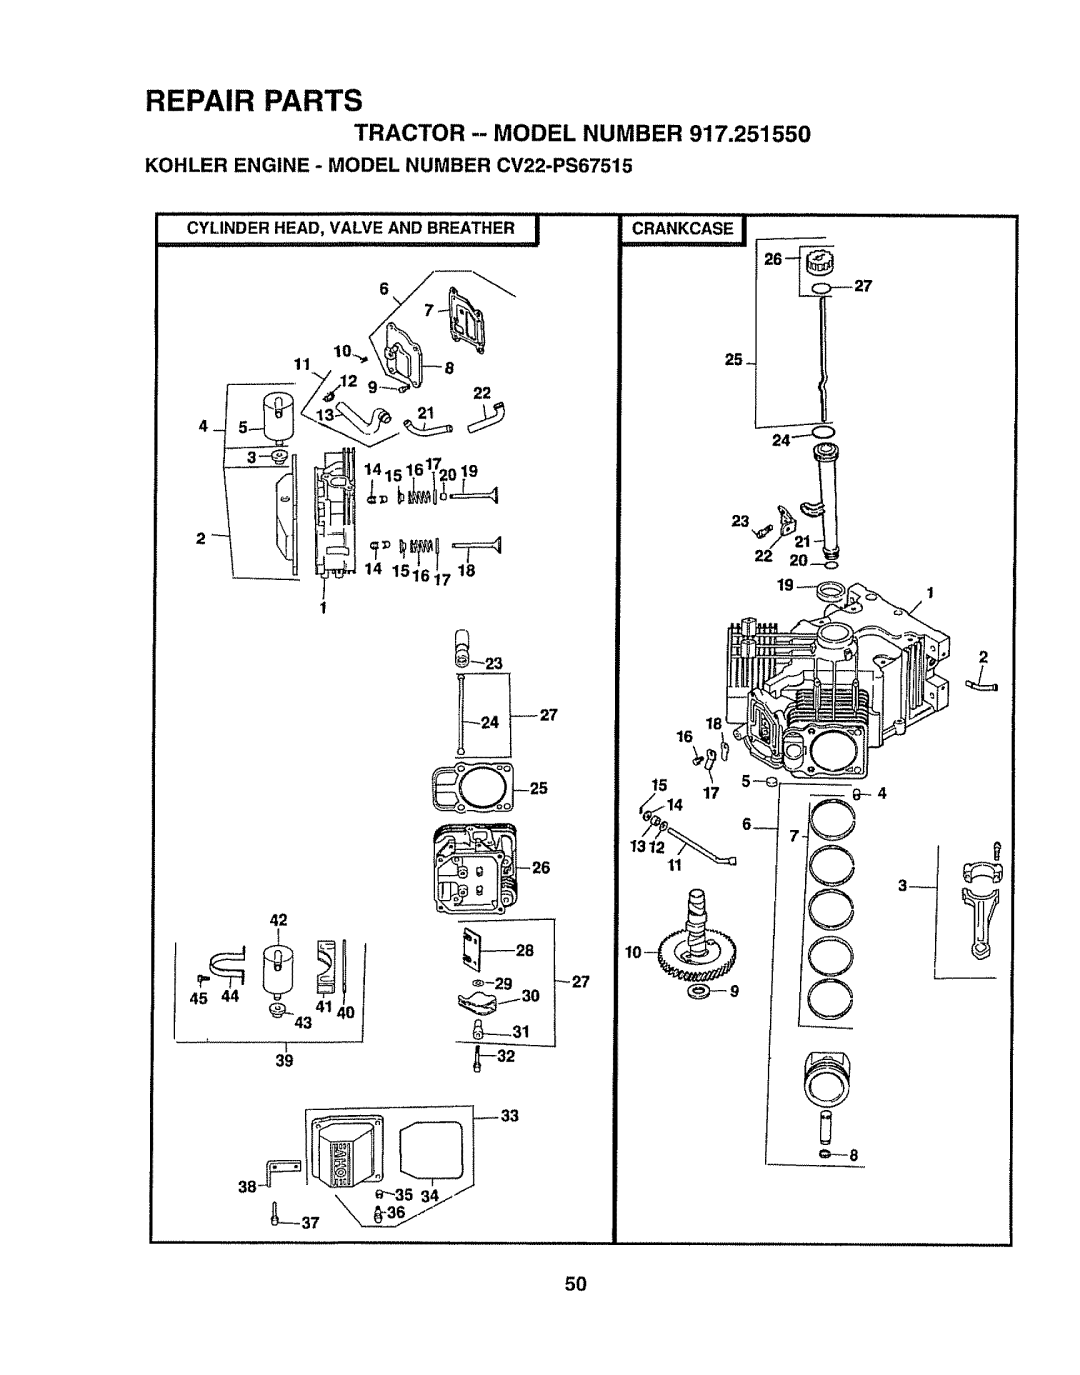 Craftsman 917O251550 owner manual 141s16+_20.19, Repair Parts, KOHLER ENGINE - MODEL NUMBER CV22-PS67515, 14 151617 